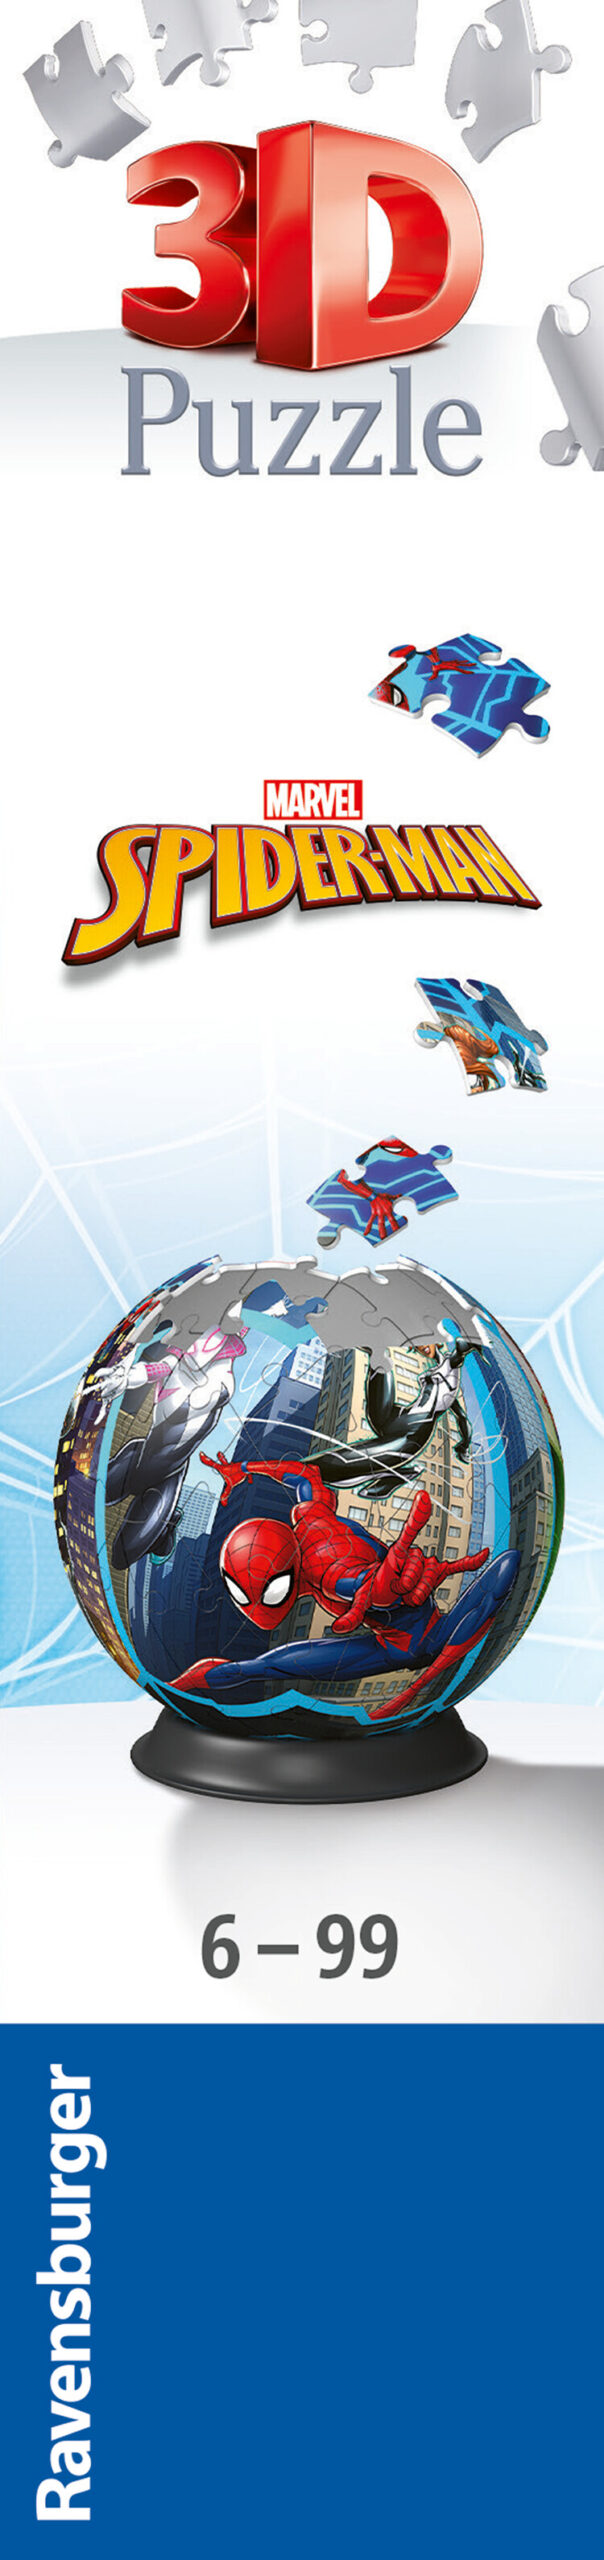 Ravensburger - 3d puzzle puzzle ball spiderman, 72 pezzi, 6+ anni - RAVENSBURGER 3D PUZZLE, Avengers, Spiderman